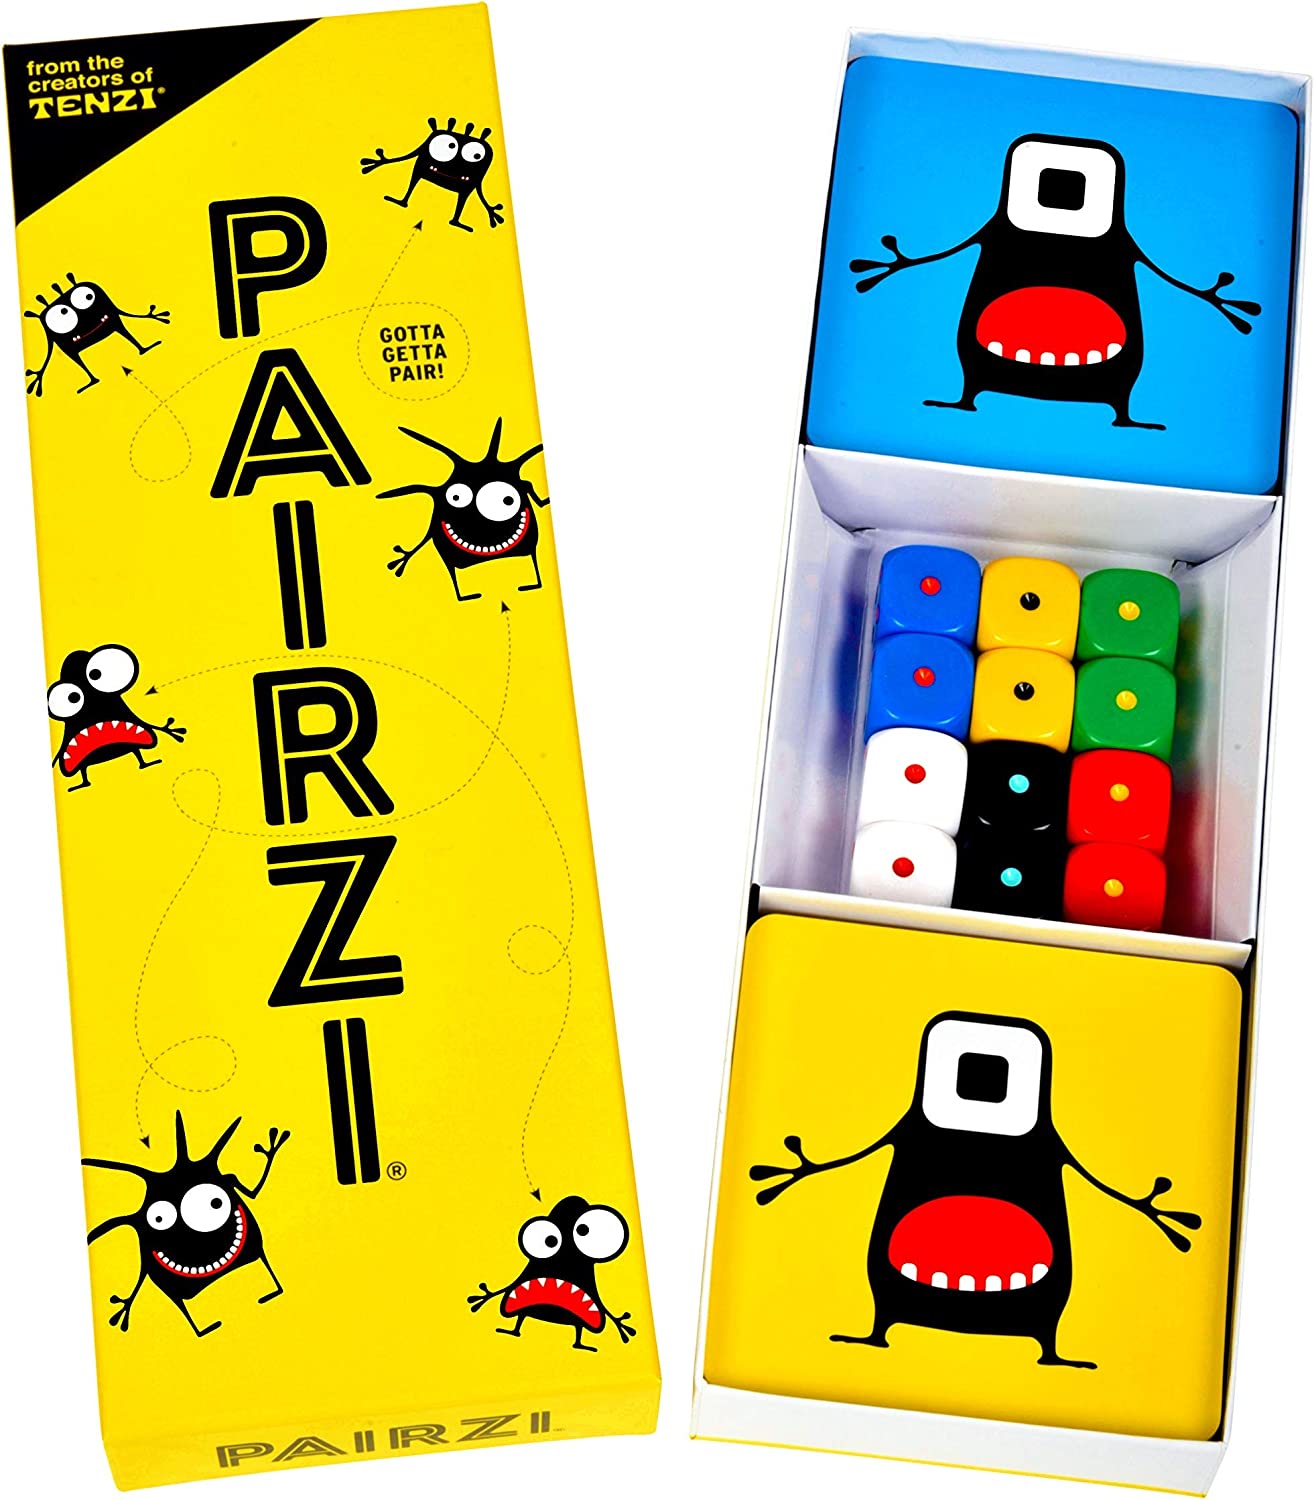 PAIRZI by Carma Games